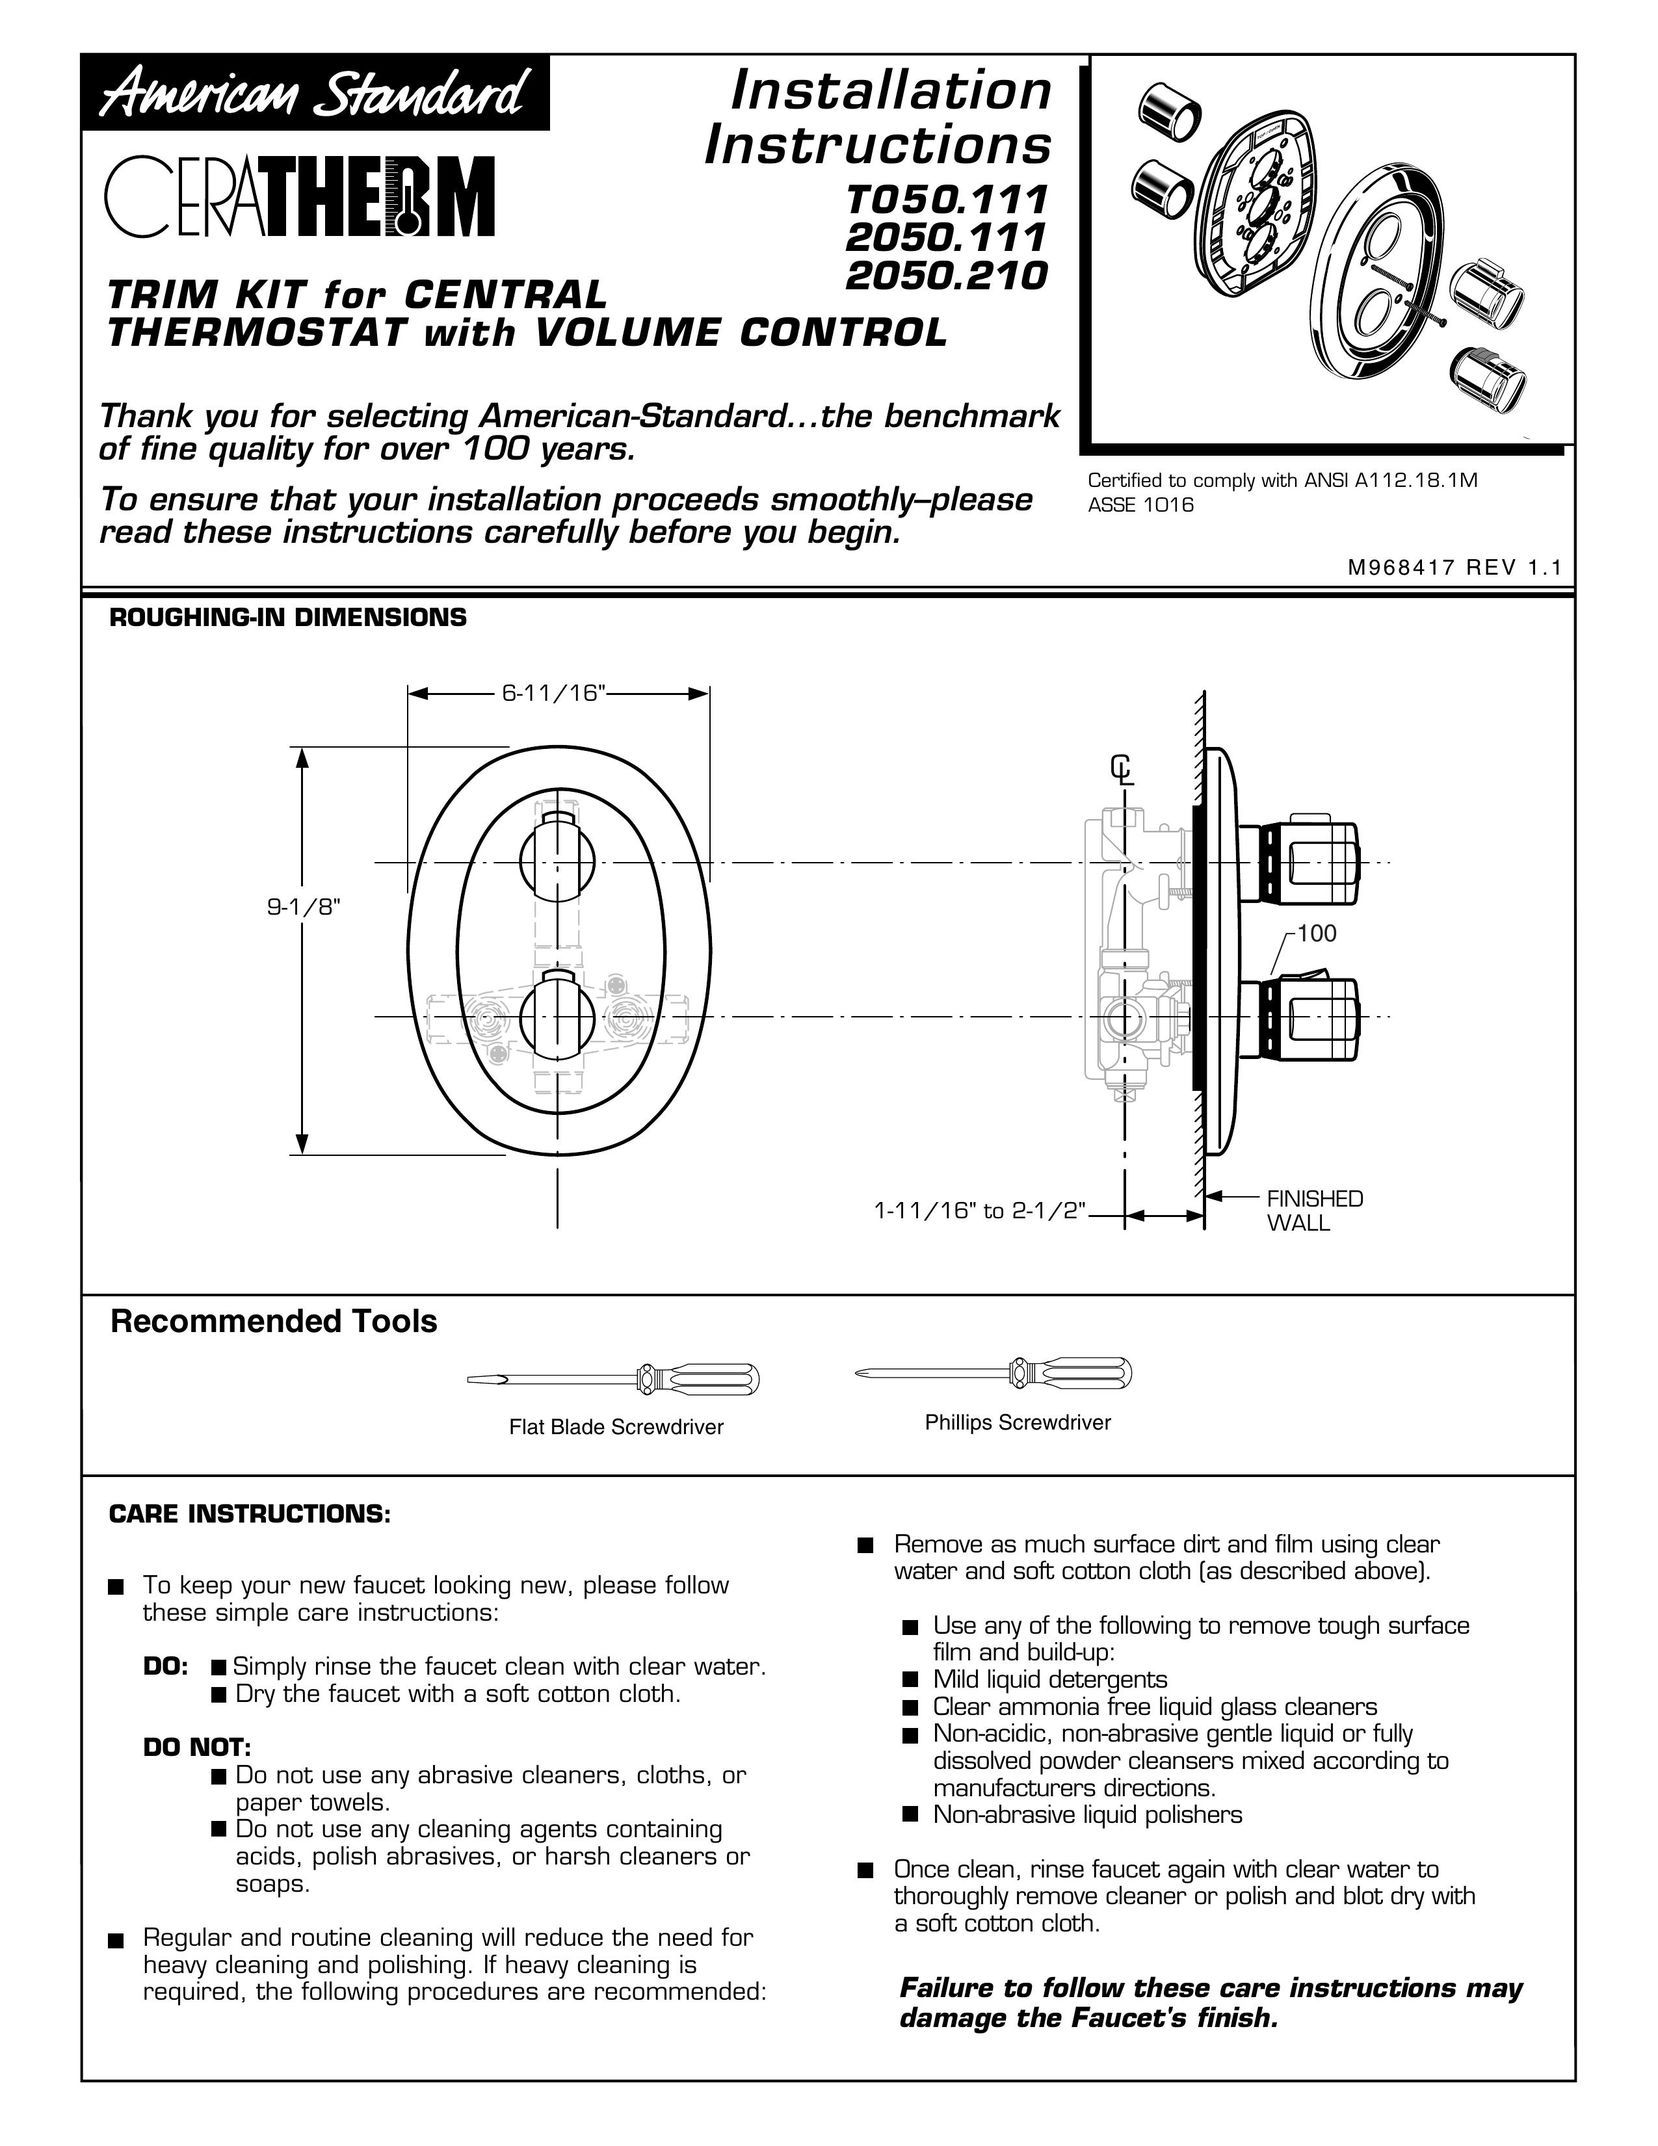 American Standard 2050.111 Thermostat User Manual